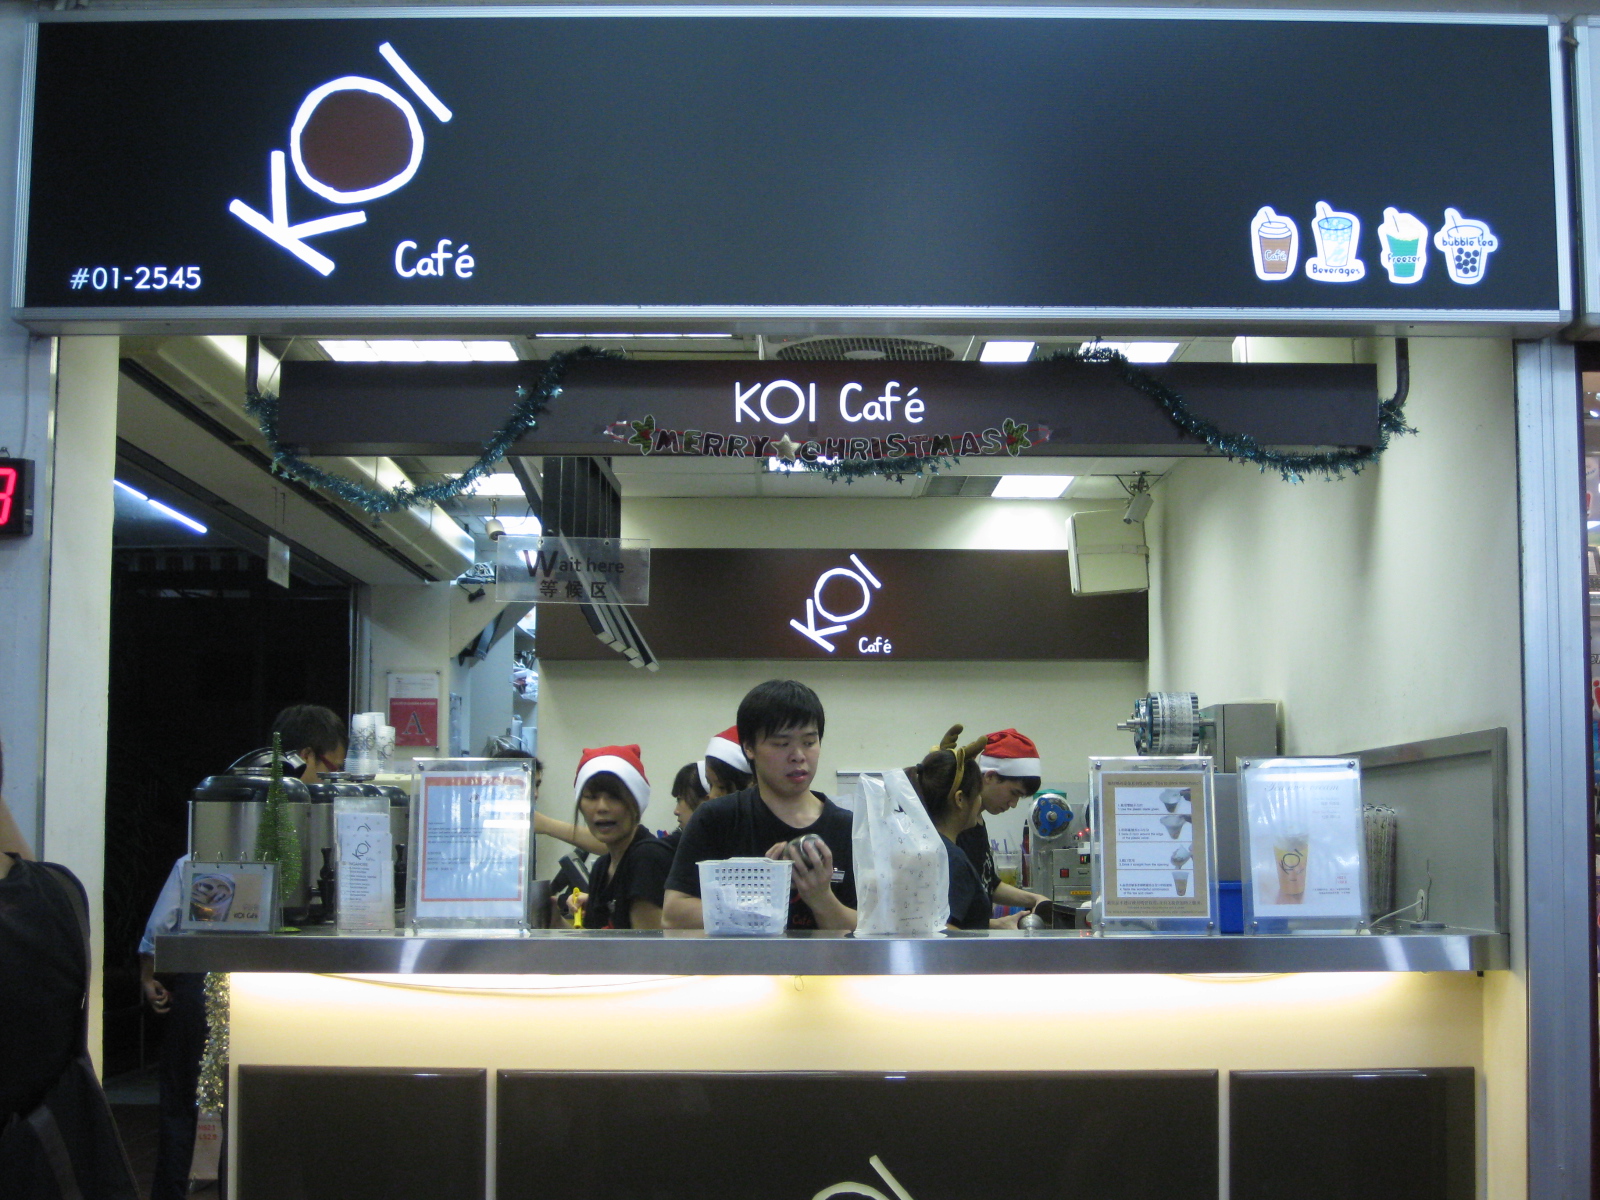  ... Bubble Tea in Singapore?, Recipe KOI Cafe - The Best Bubble Tea in